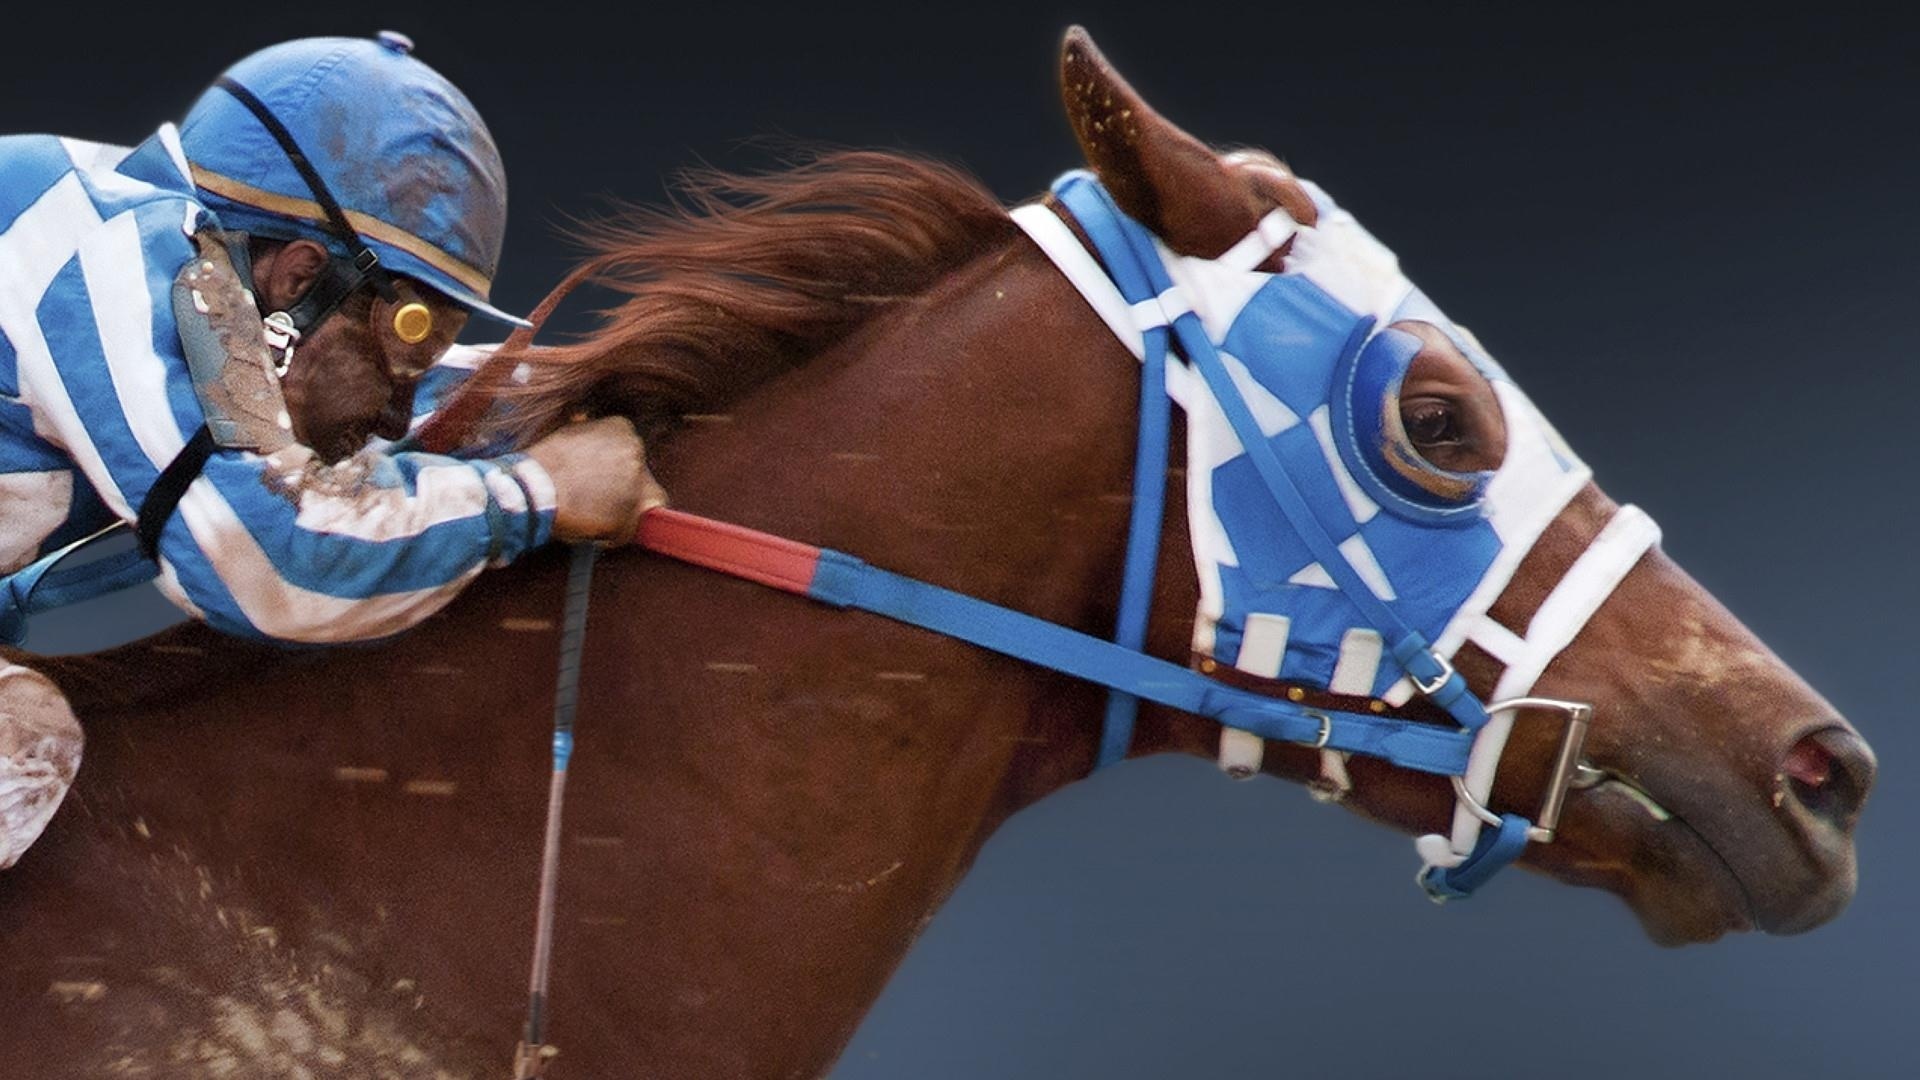 Secretariat, HD wallpaper, Background image, Race horse, 1920x1080 Full HD Desktop